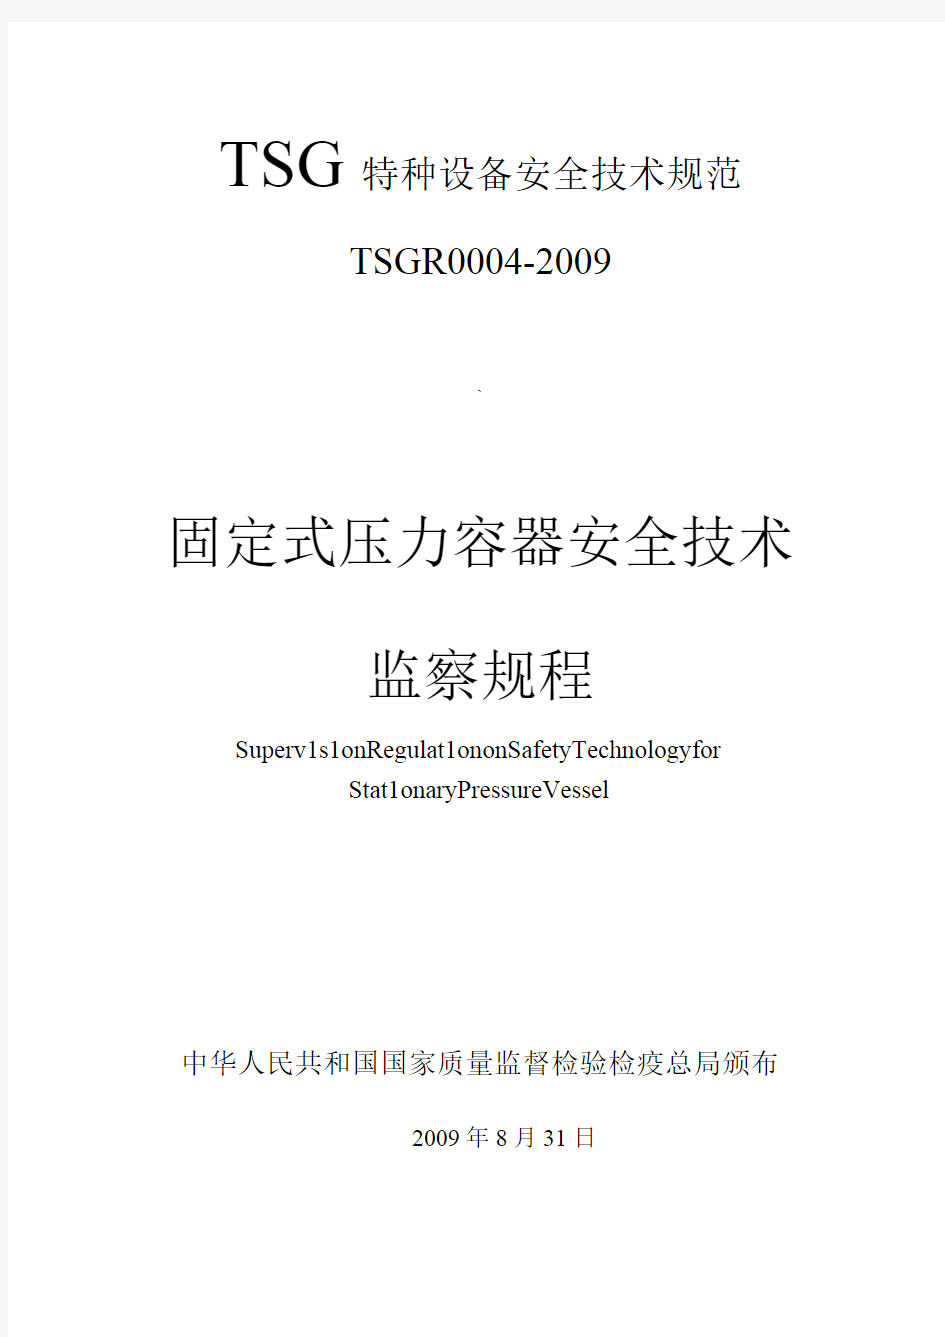 TSGR0004-2009固定式压力容器安全技术监察规程(pdf 62页)